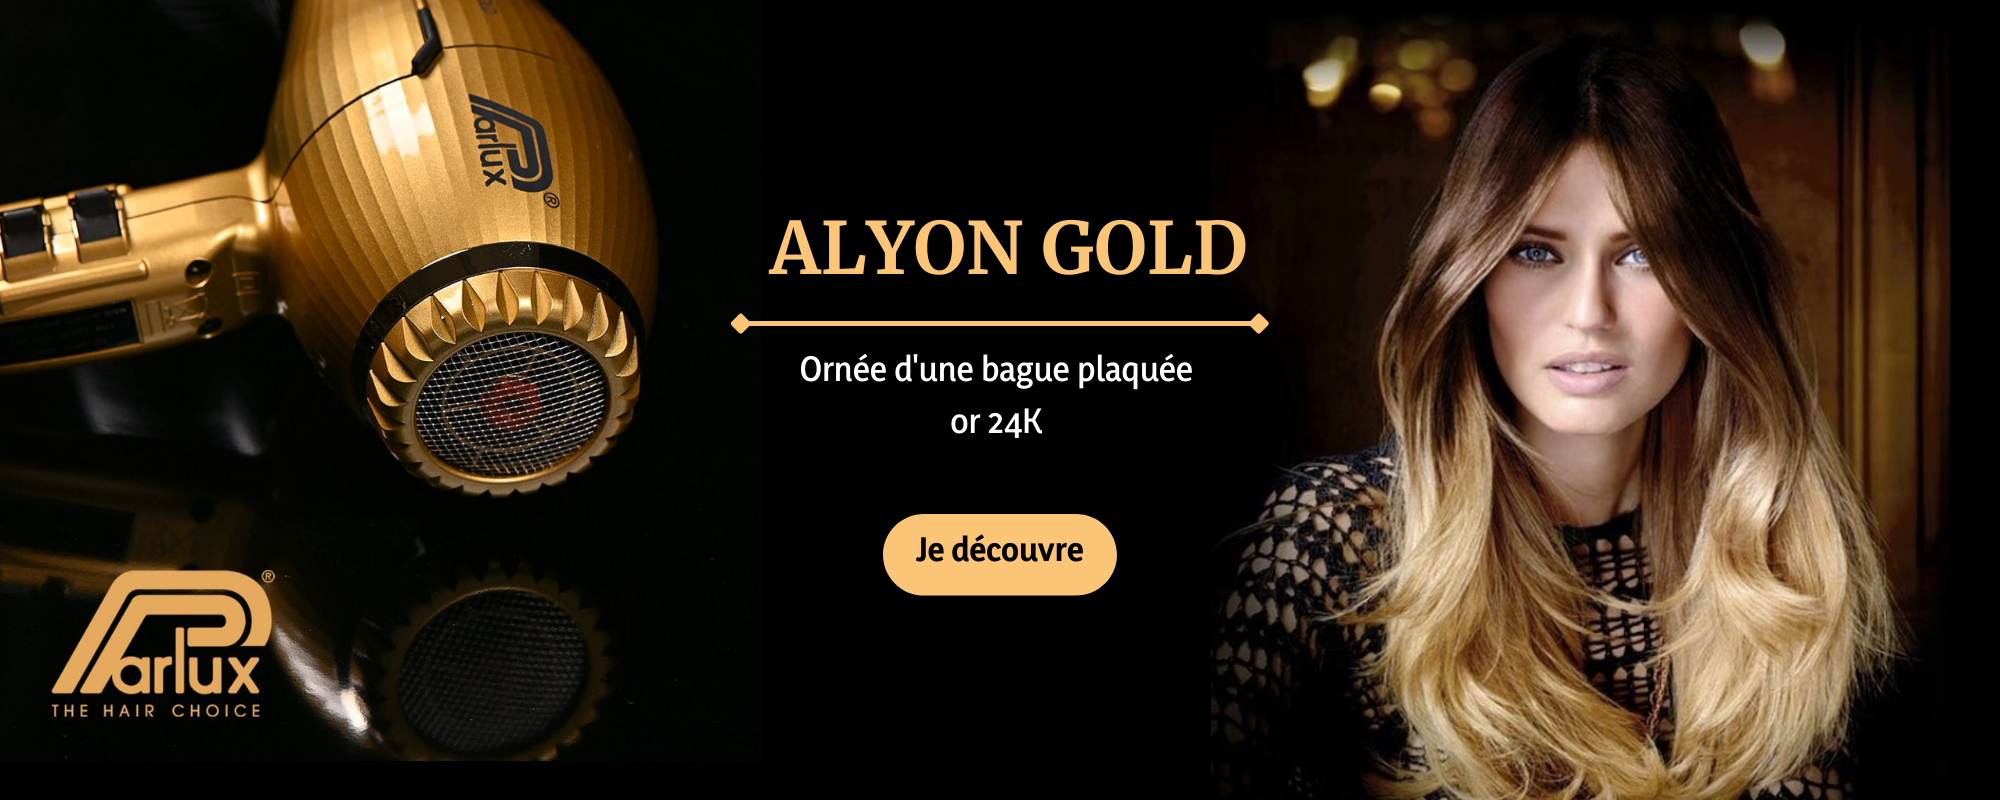 alyon gold parlux 